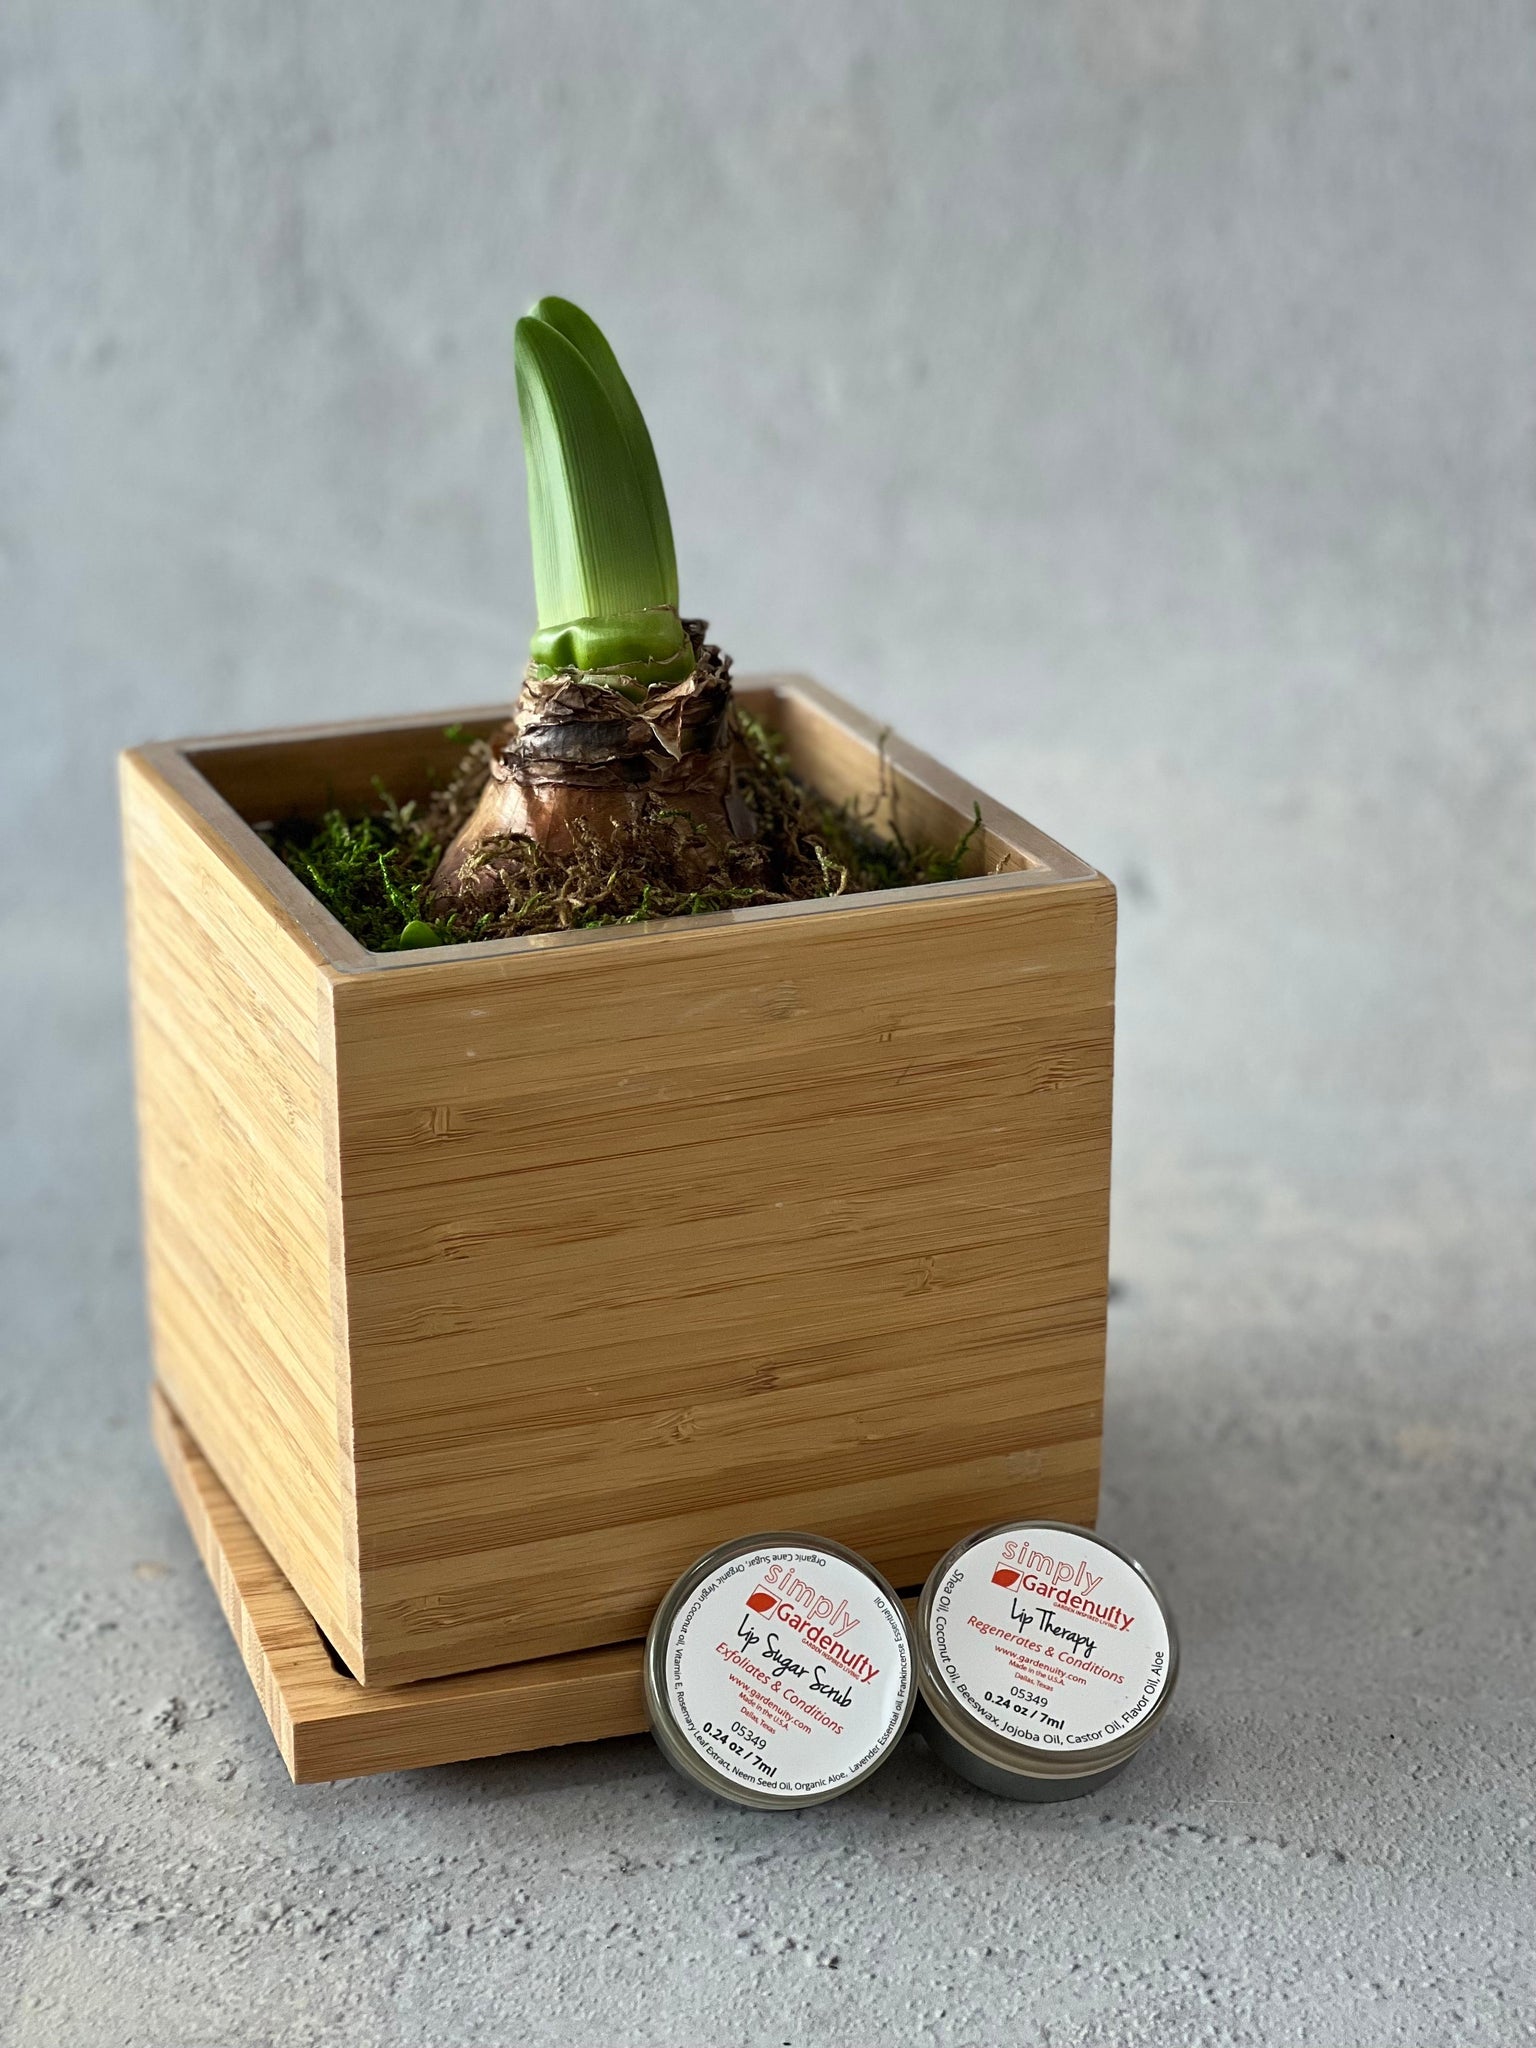 Alfresco Amaryllis in Bamboo Planter Lip Scrub Gift Set by Gardenuity